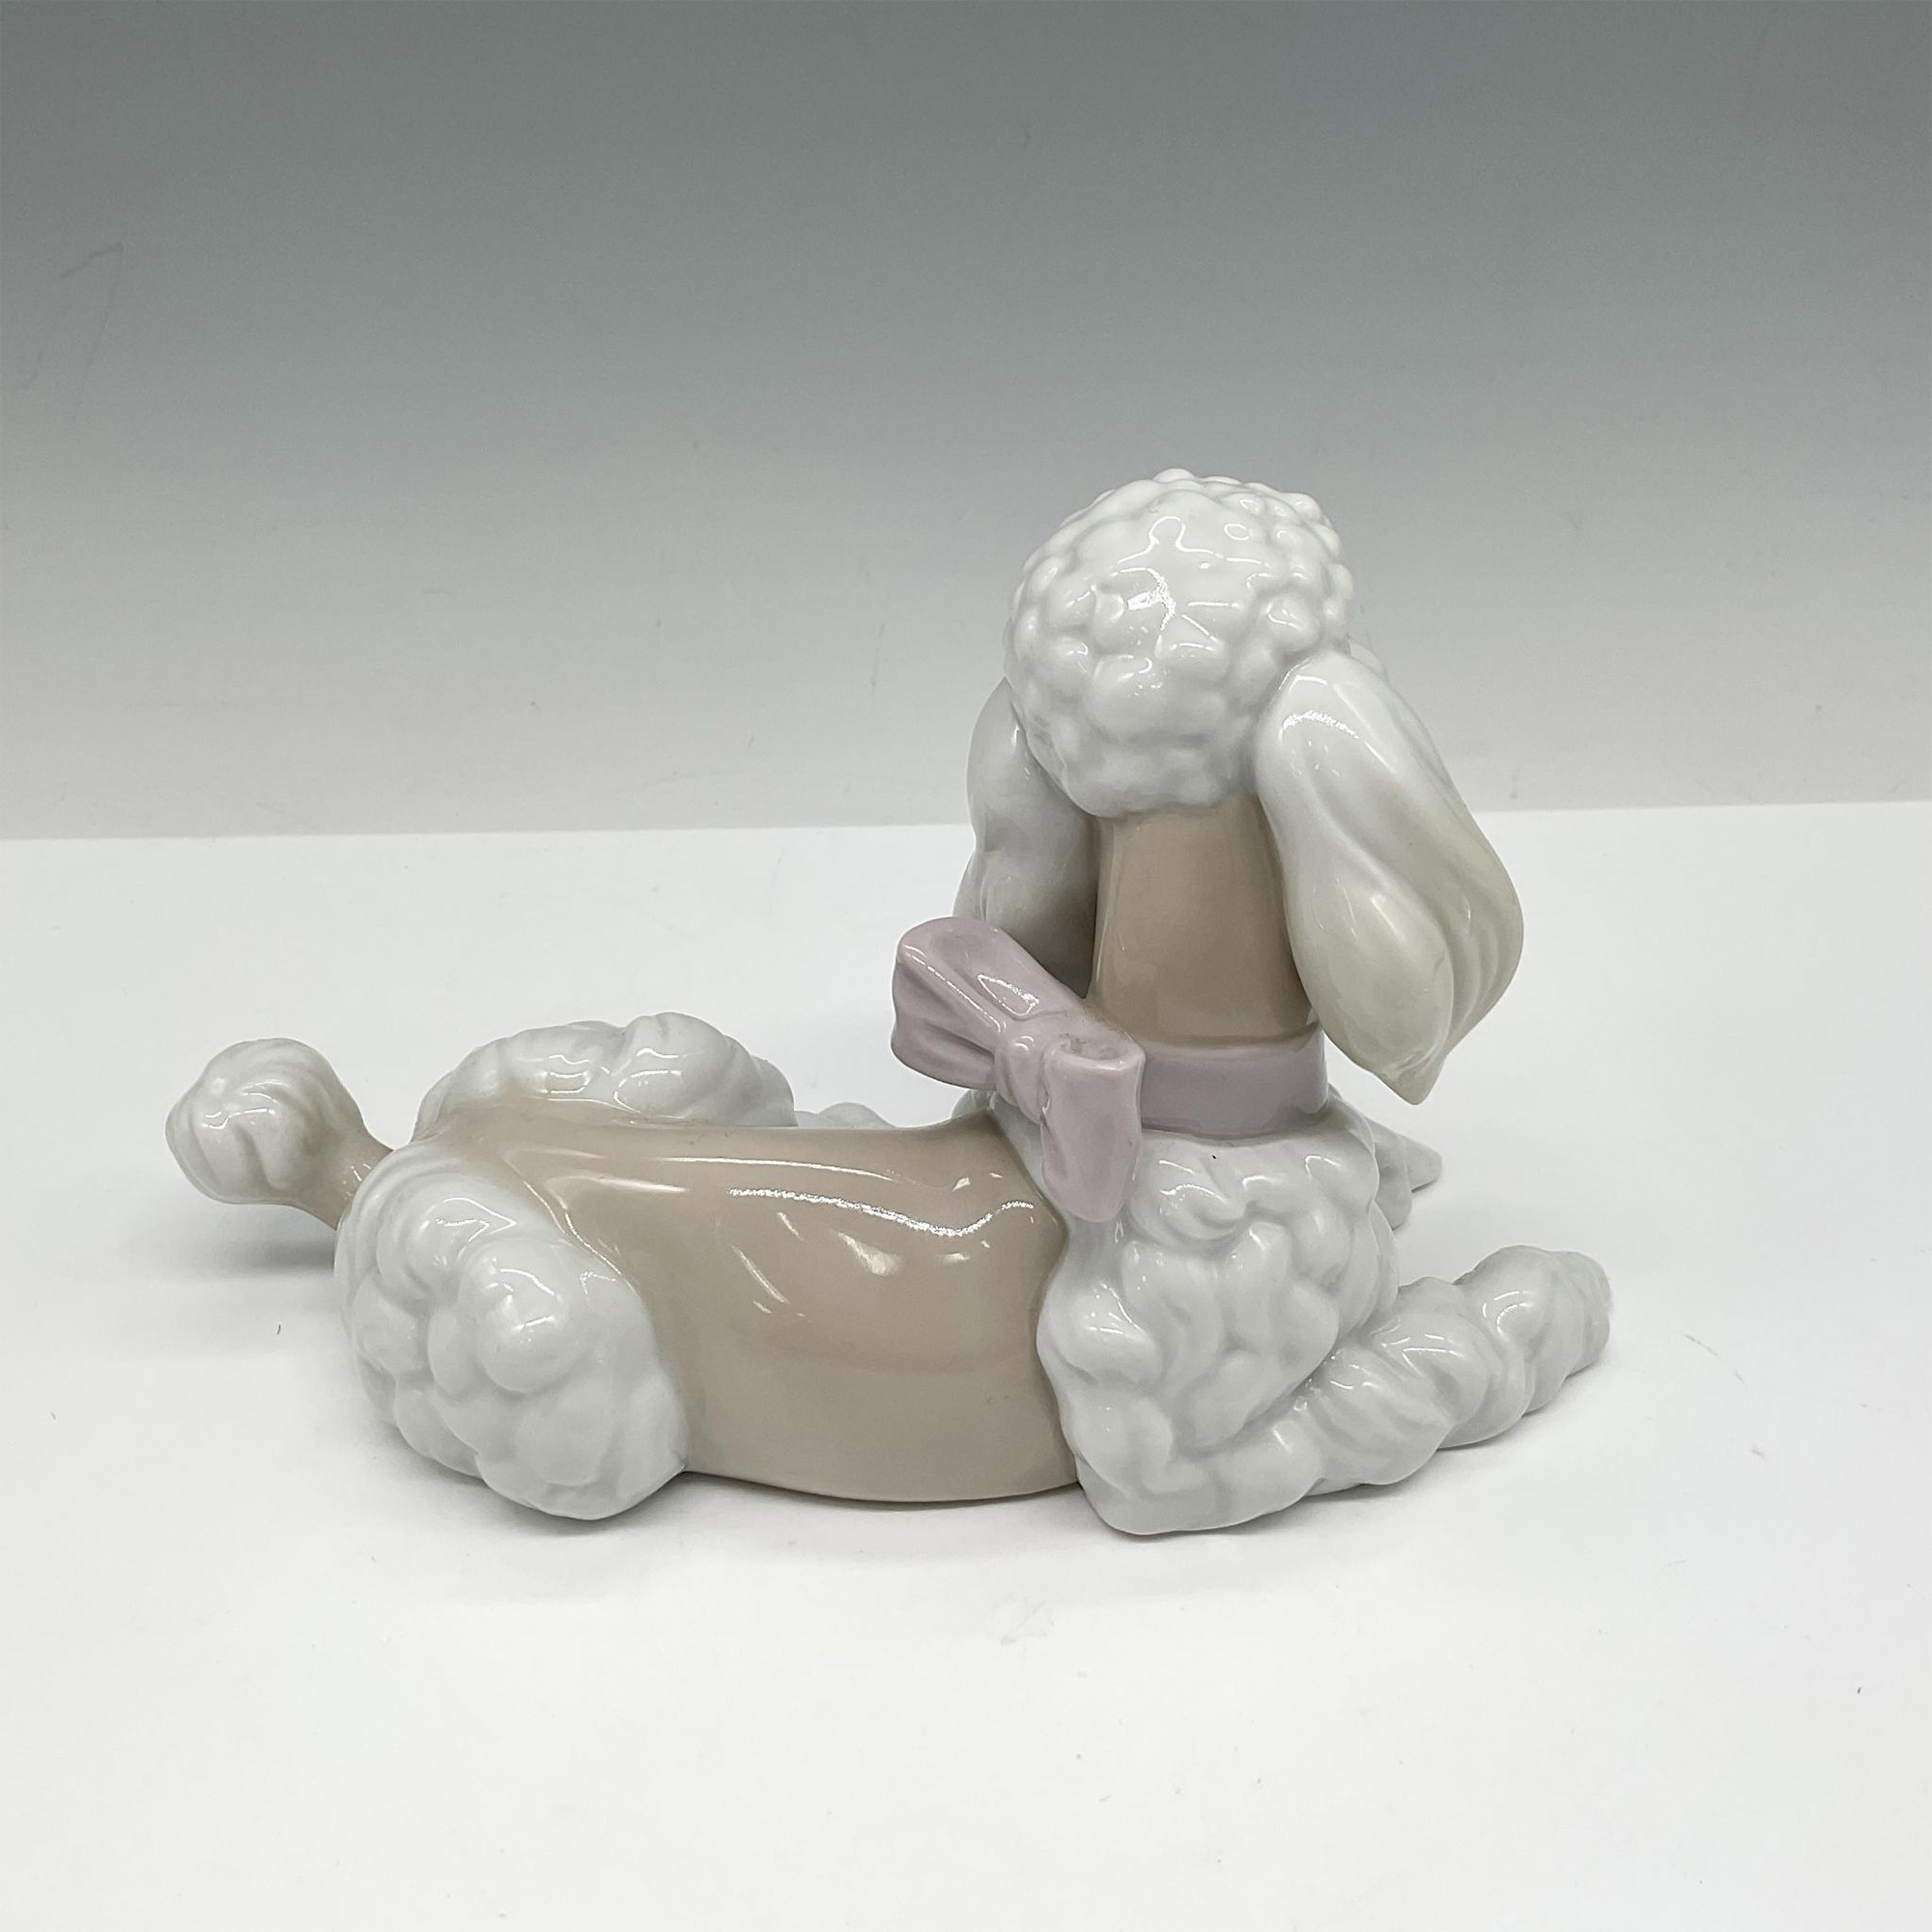 Lladro Porcelain Figurine, Sitting Poodle 1006337 - Image 2 of 3